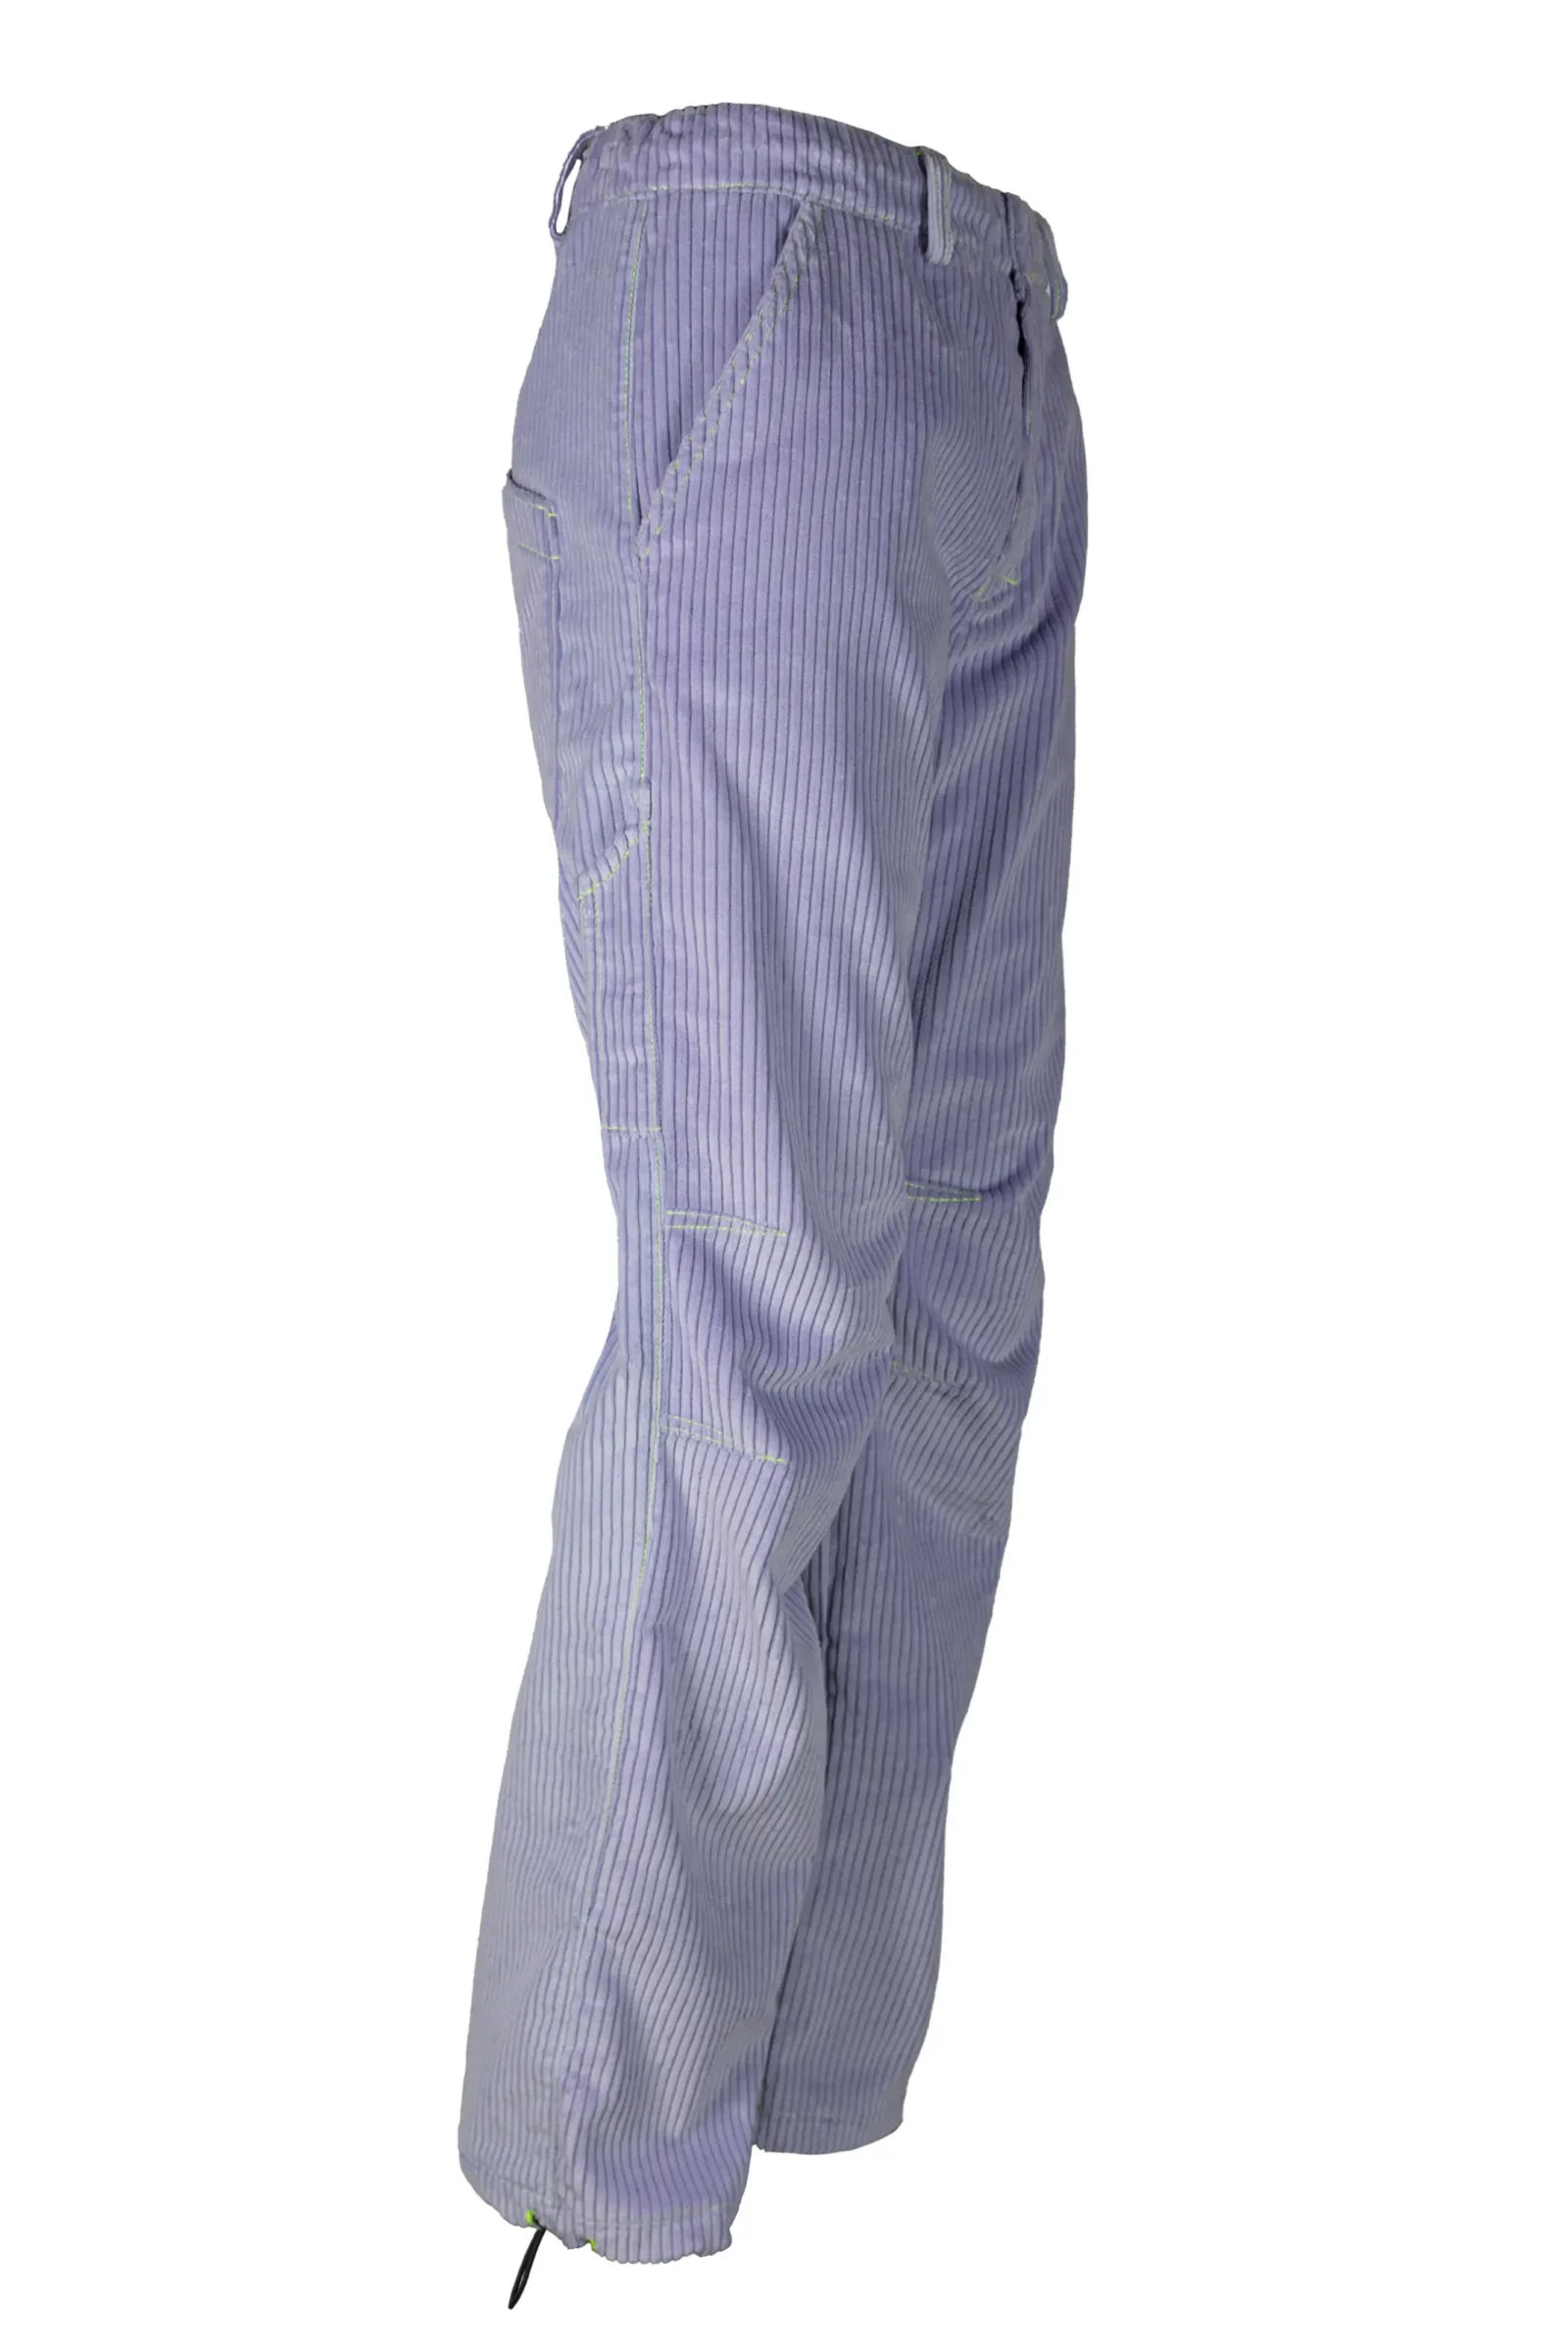 Pantalon homme - velours côtelé moyen - lilas - GRILLO MONVIC